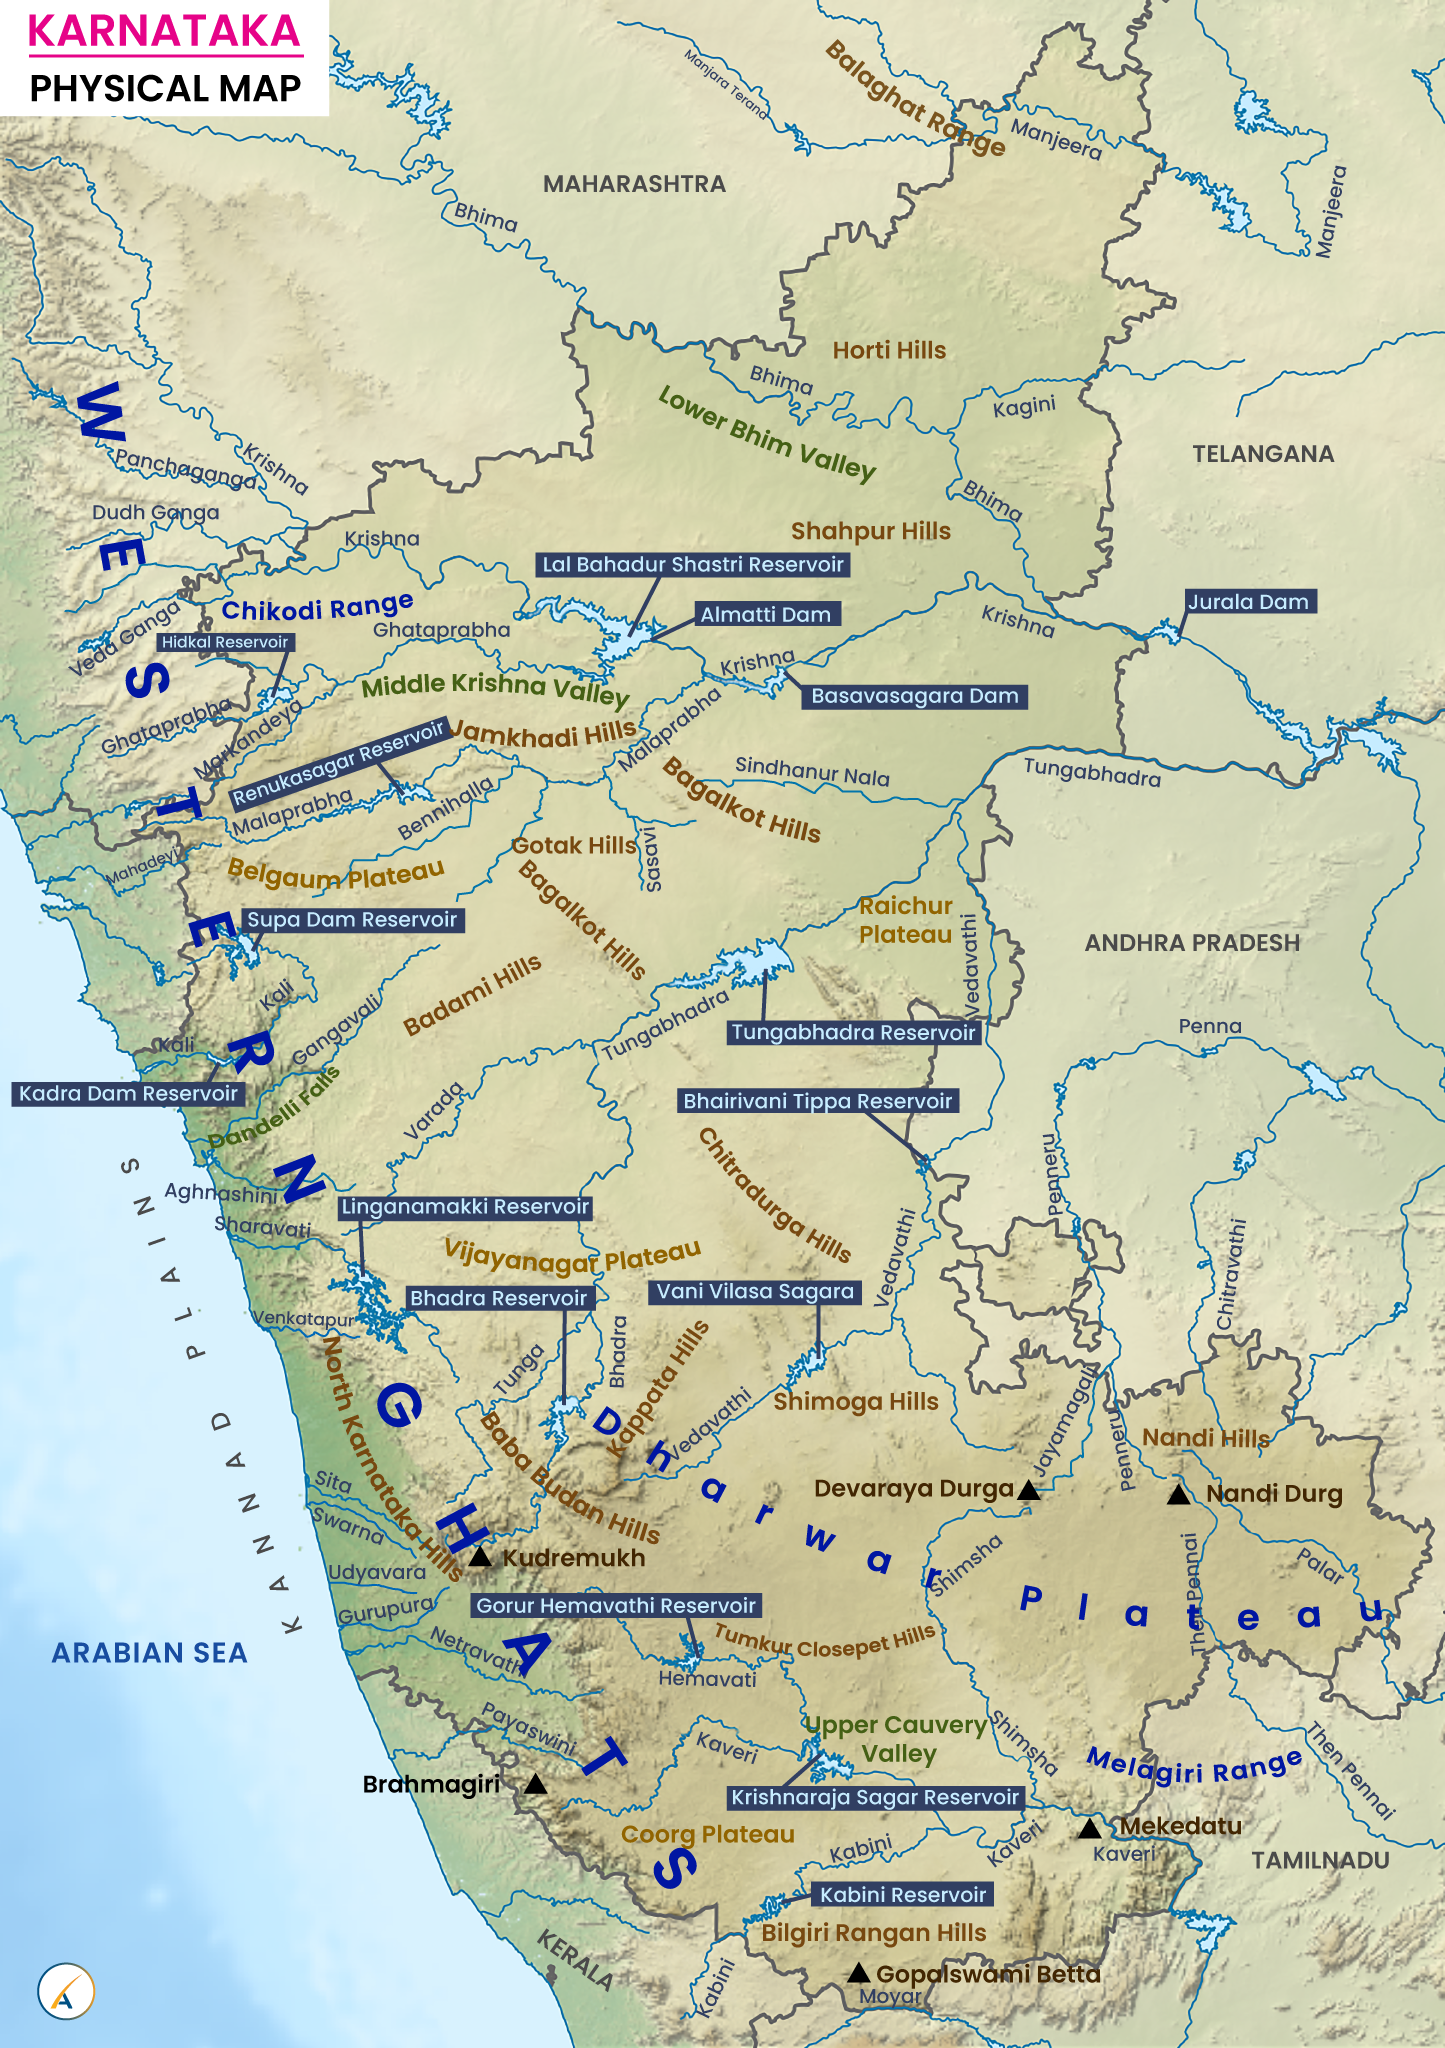 Karnataka Physical Map